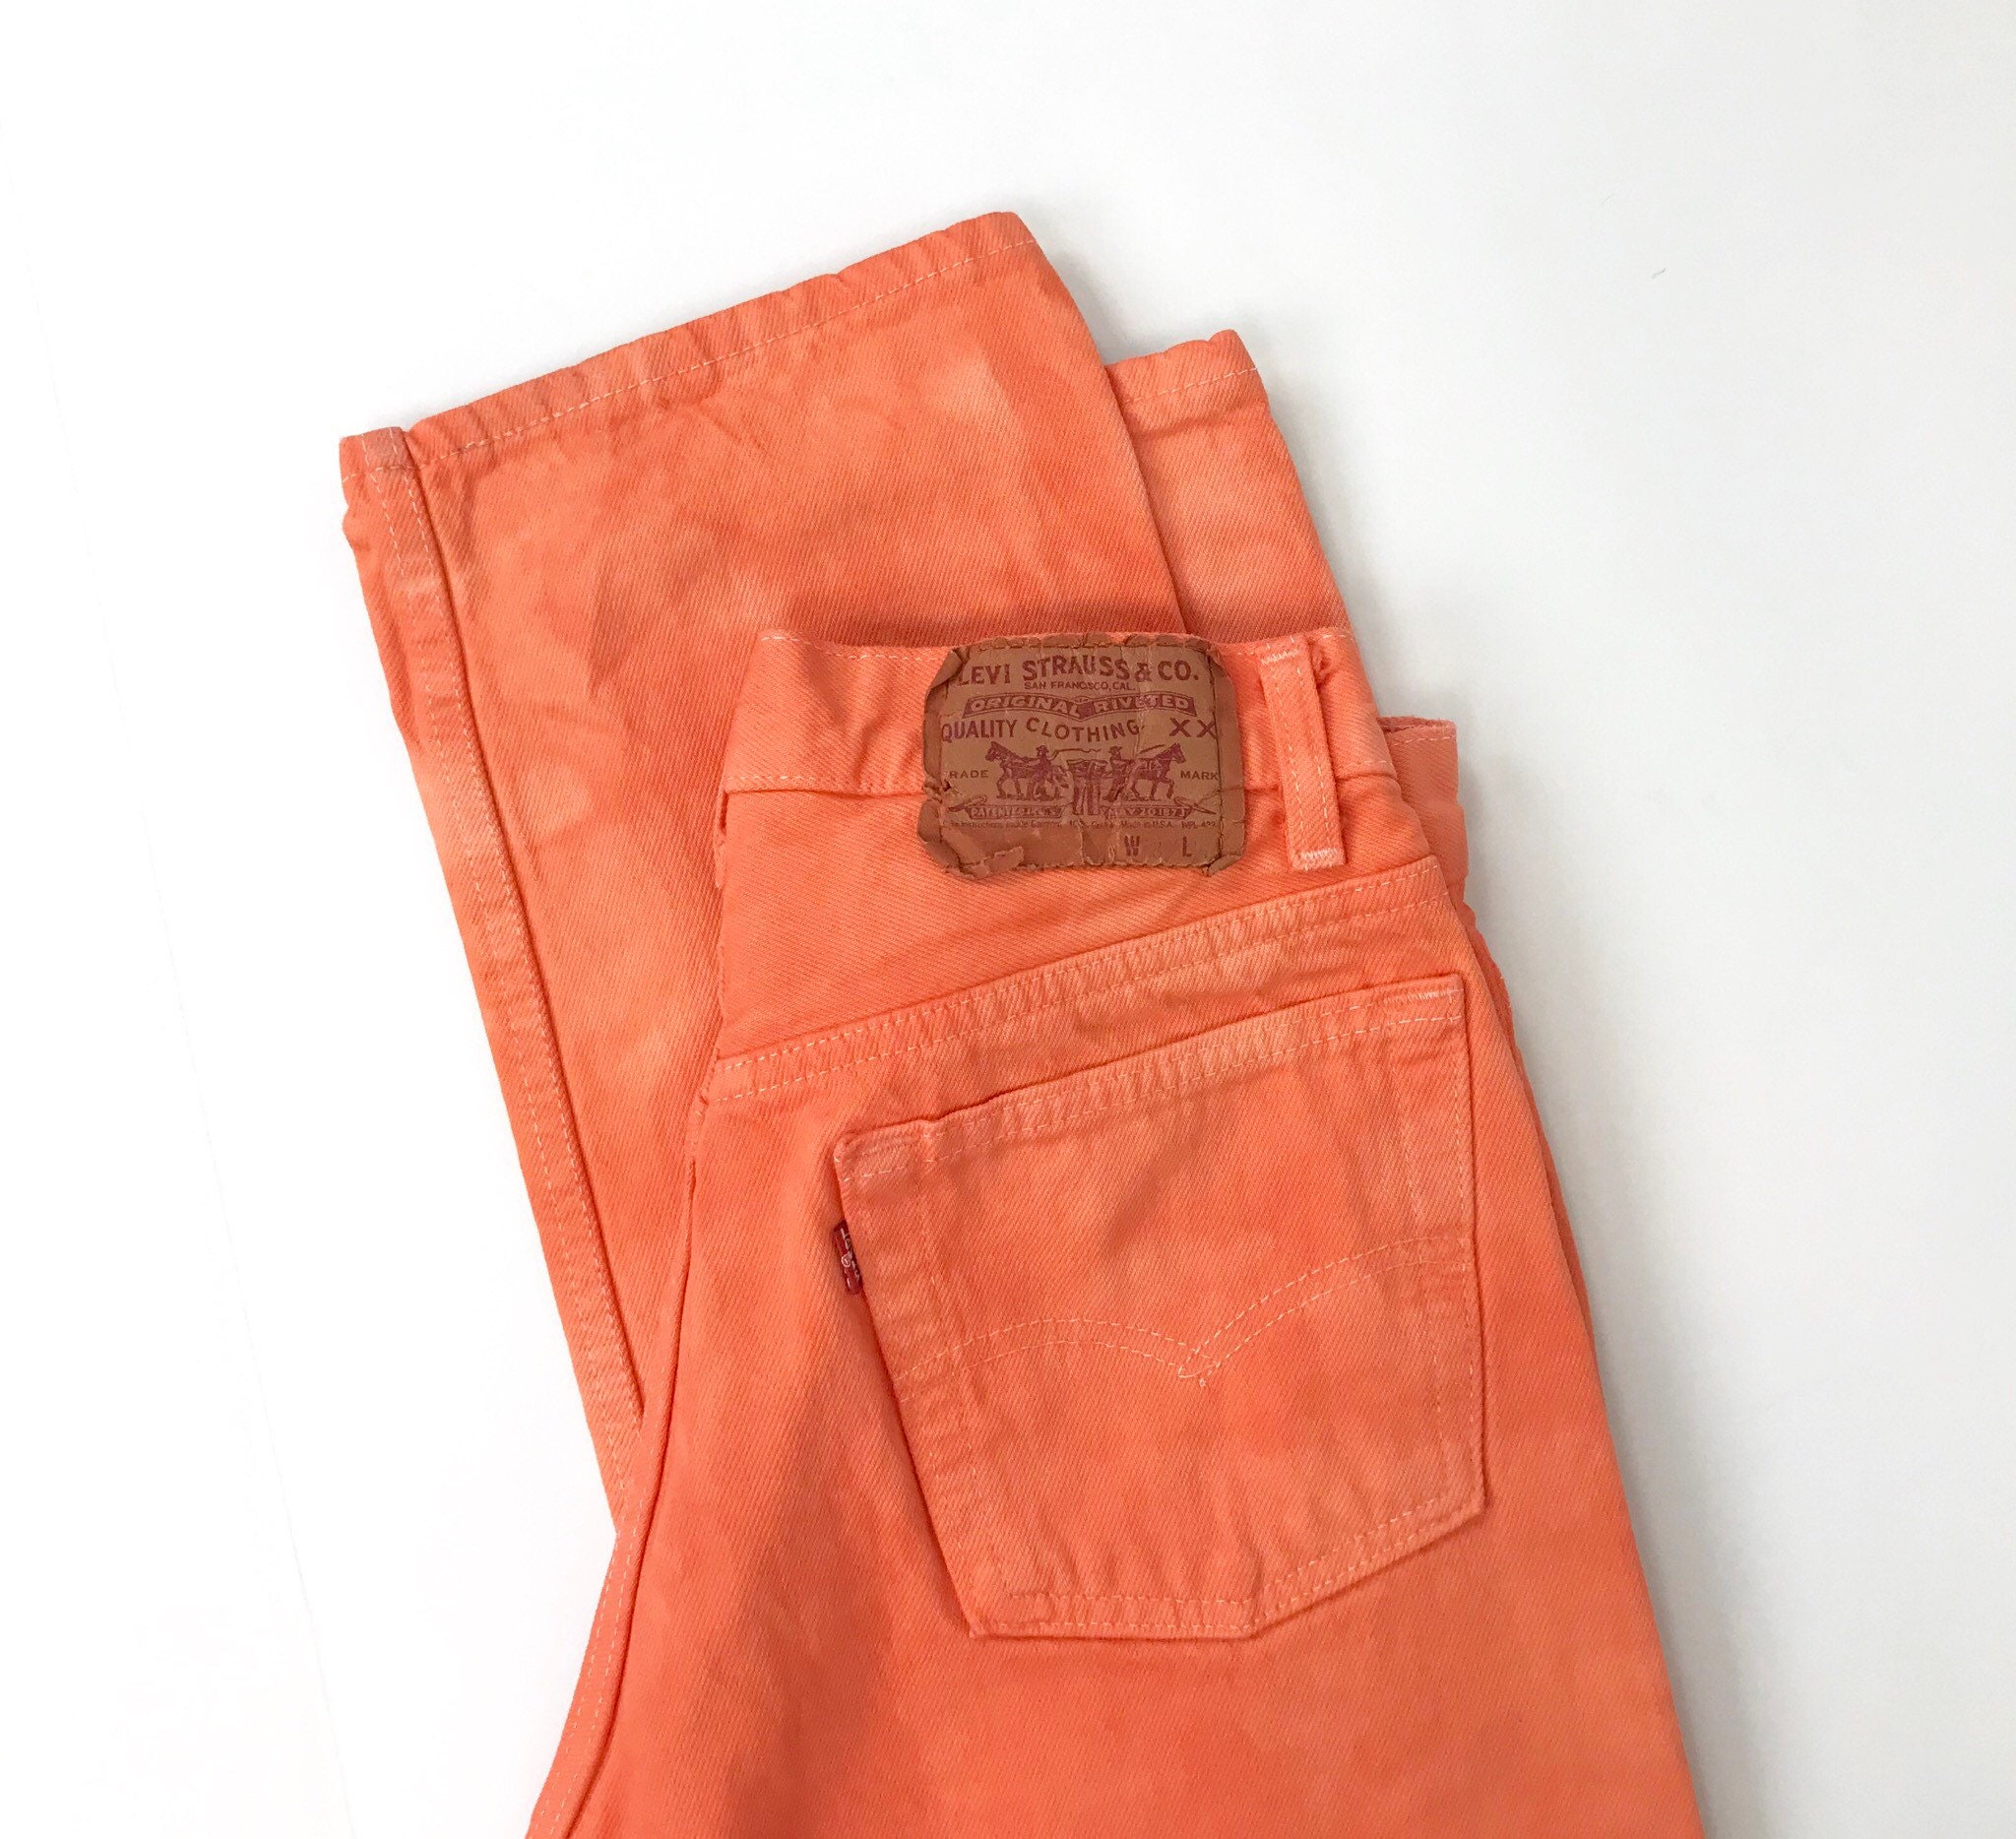 Levi's 501 Salmon Overdye Jeans / Size 25 26